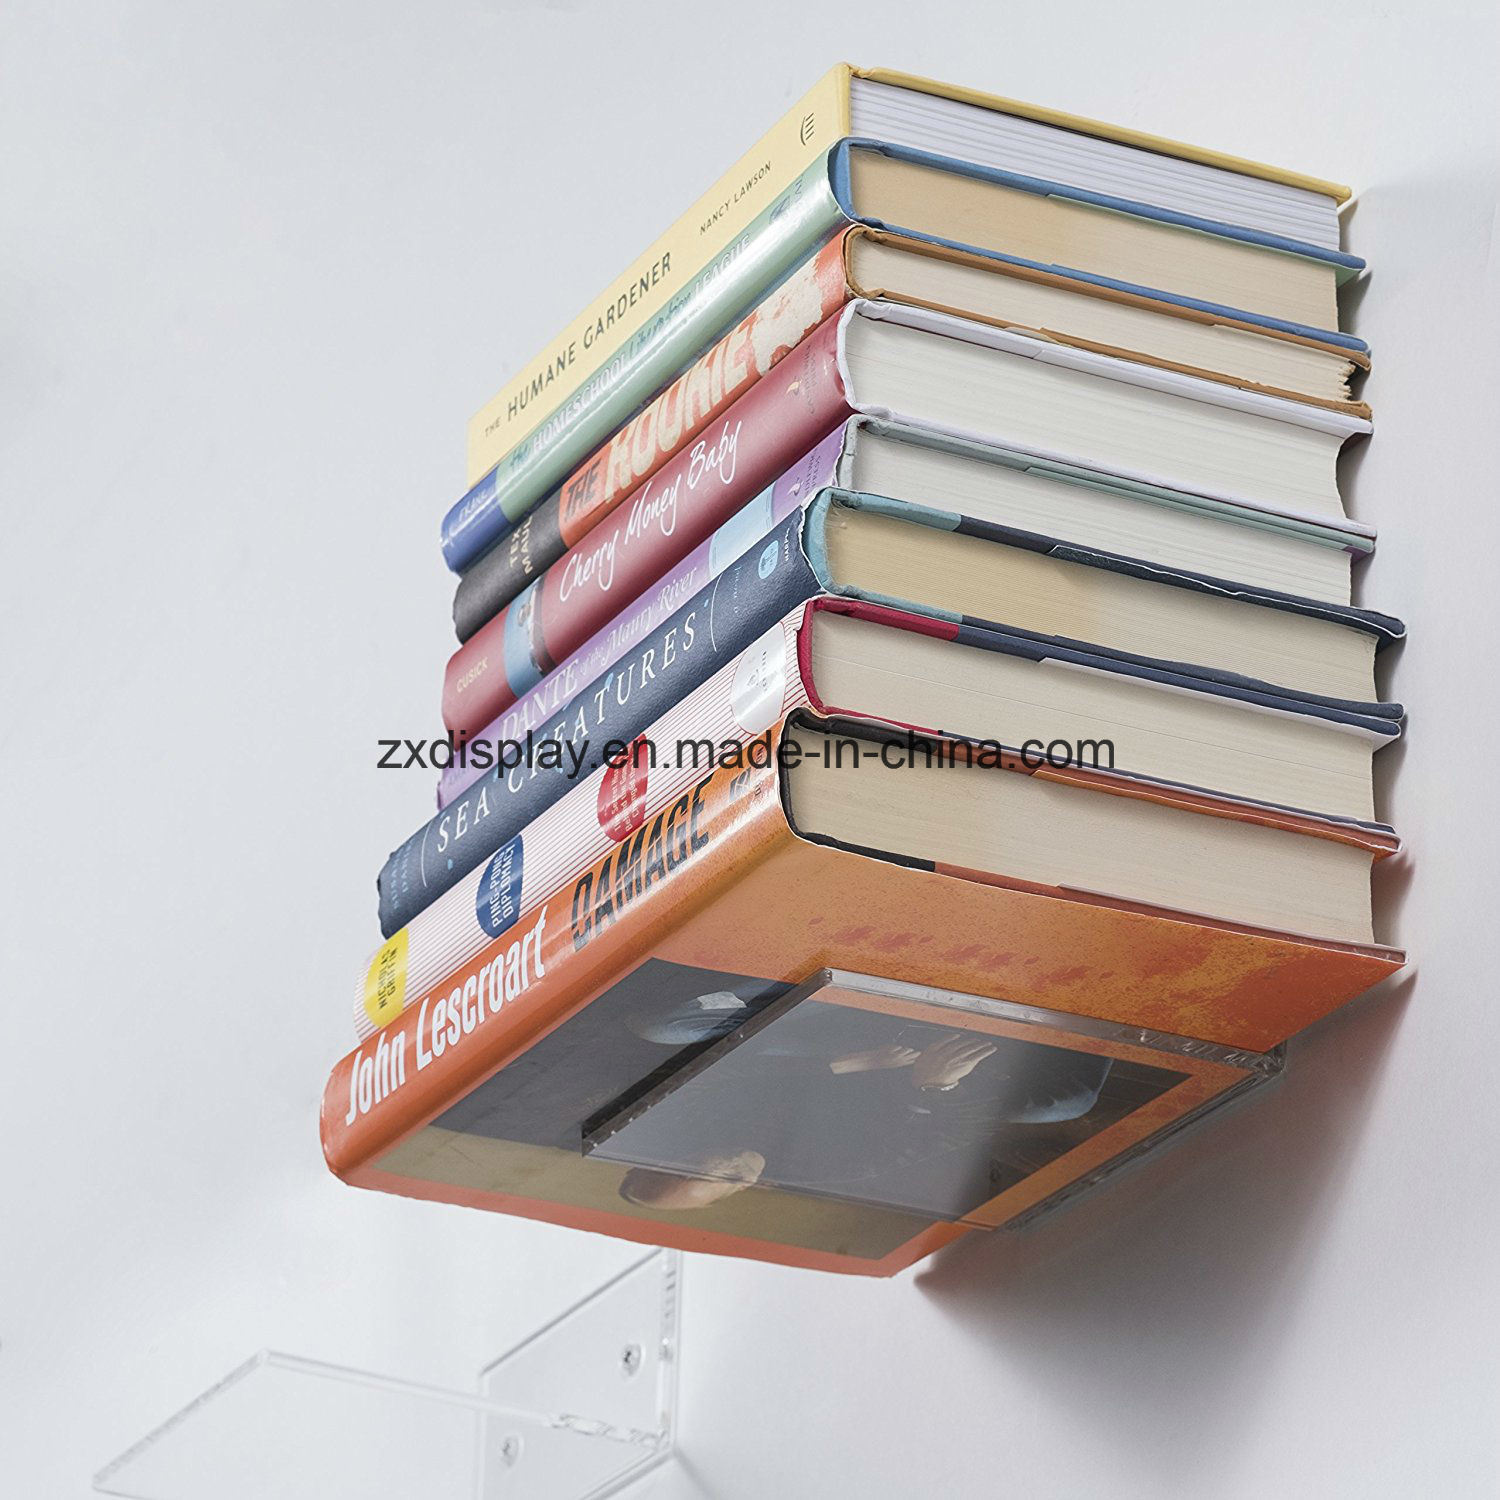 /proimages/2f0j00nFpTliUybPzo/acrylic-5-inch-compact-living-room-floating-shelves.jpg